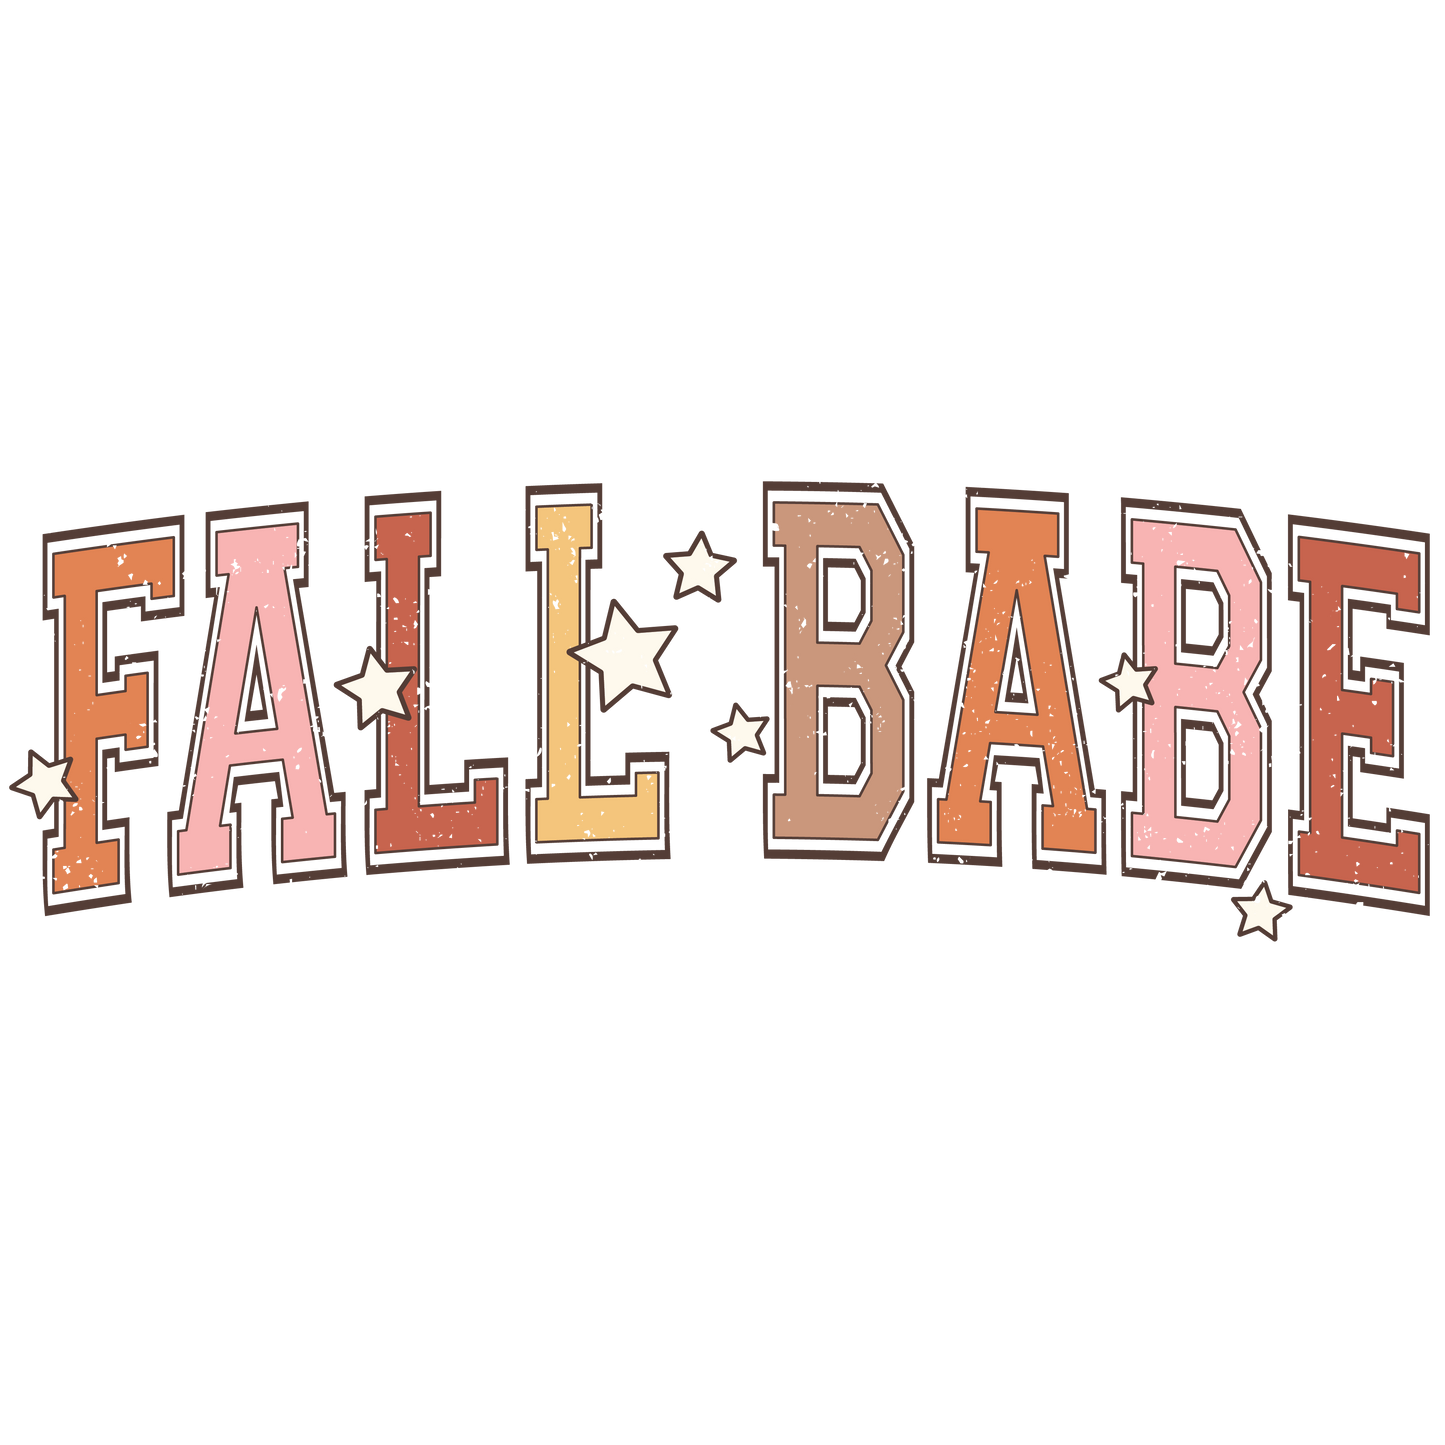 FALL PRINT 9 - FALL BABE